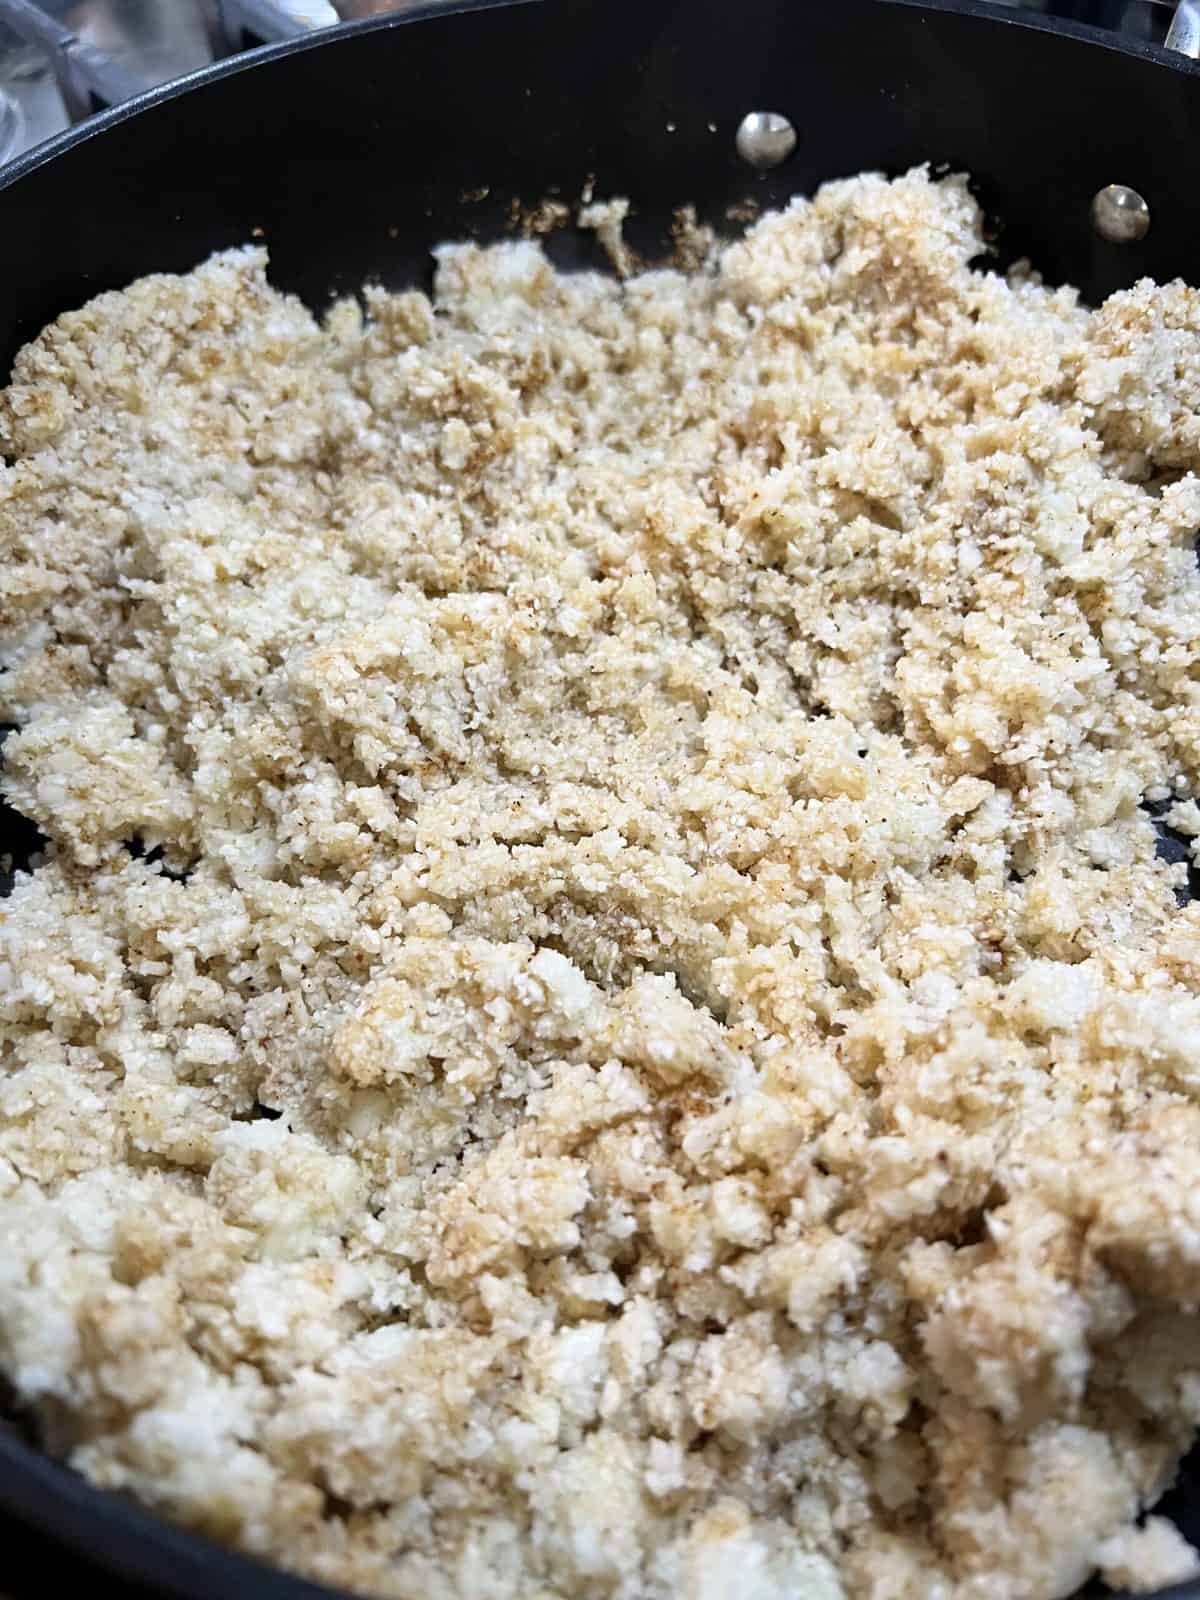 post mixing cauliflower rice and seasoning in black pan